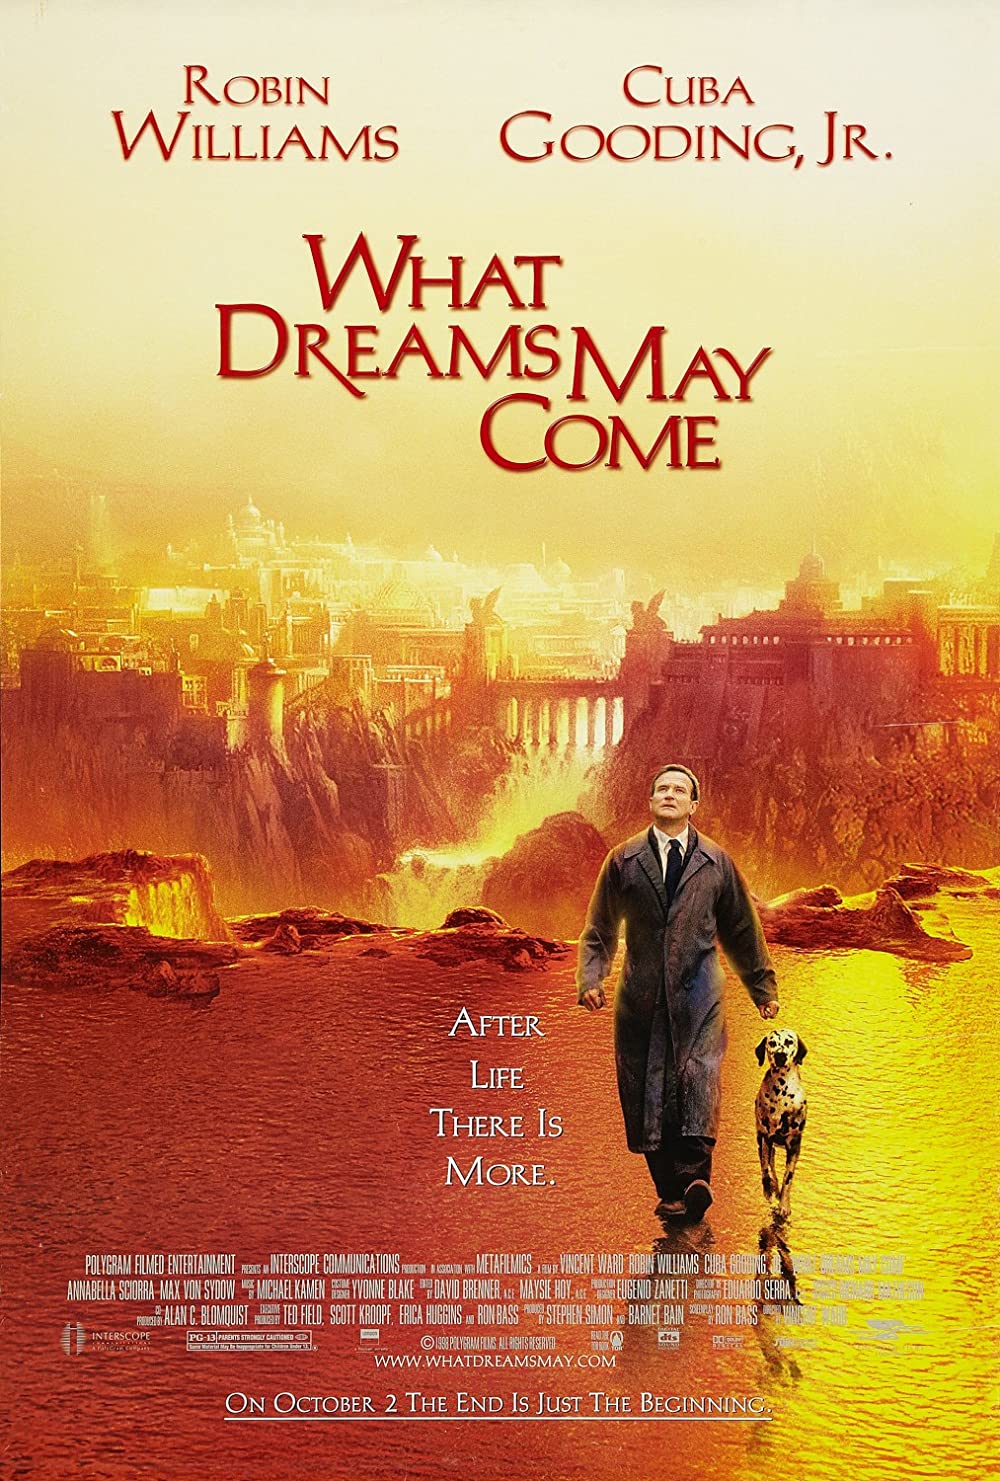 Filmbeschreibung zu What Dreams May Come